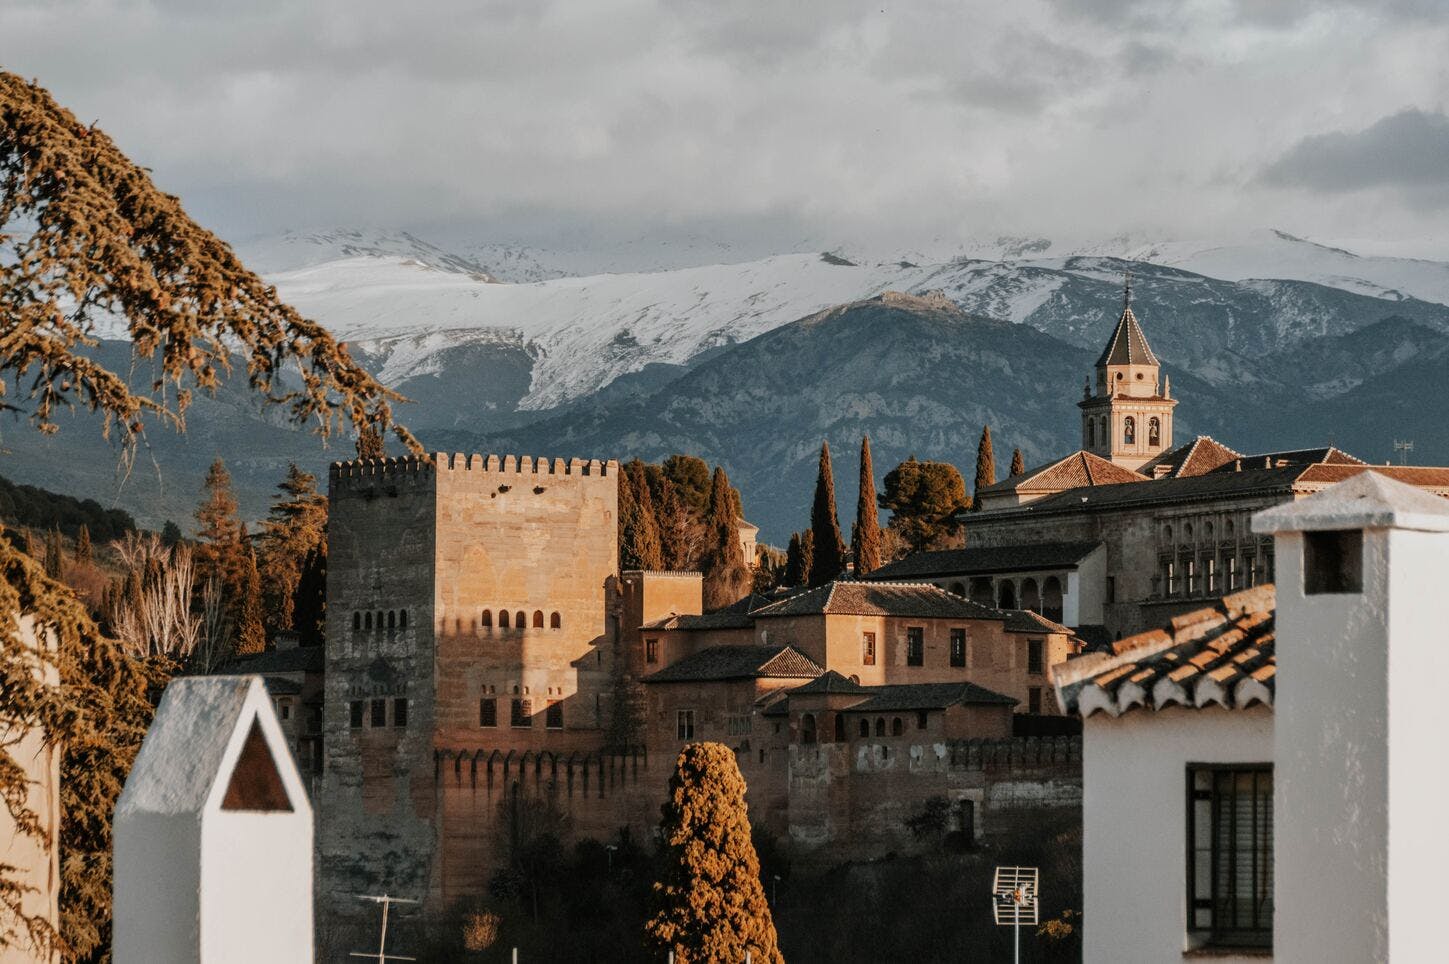 A view of medieval buildings in Granada